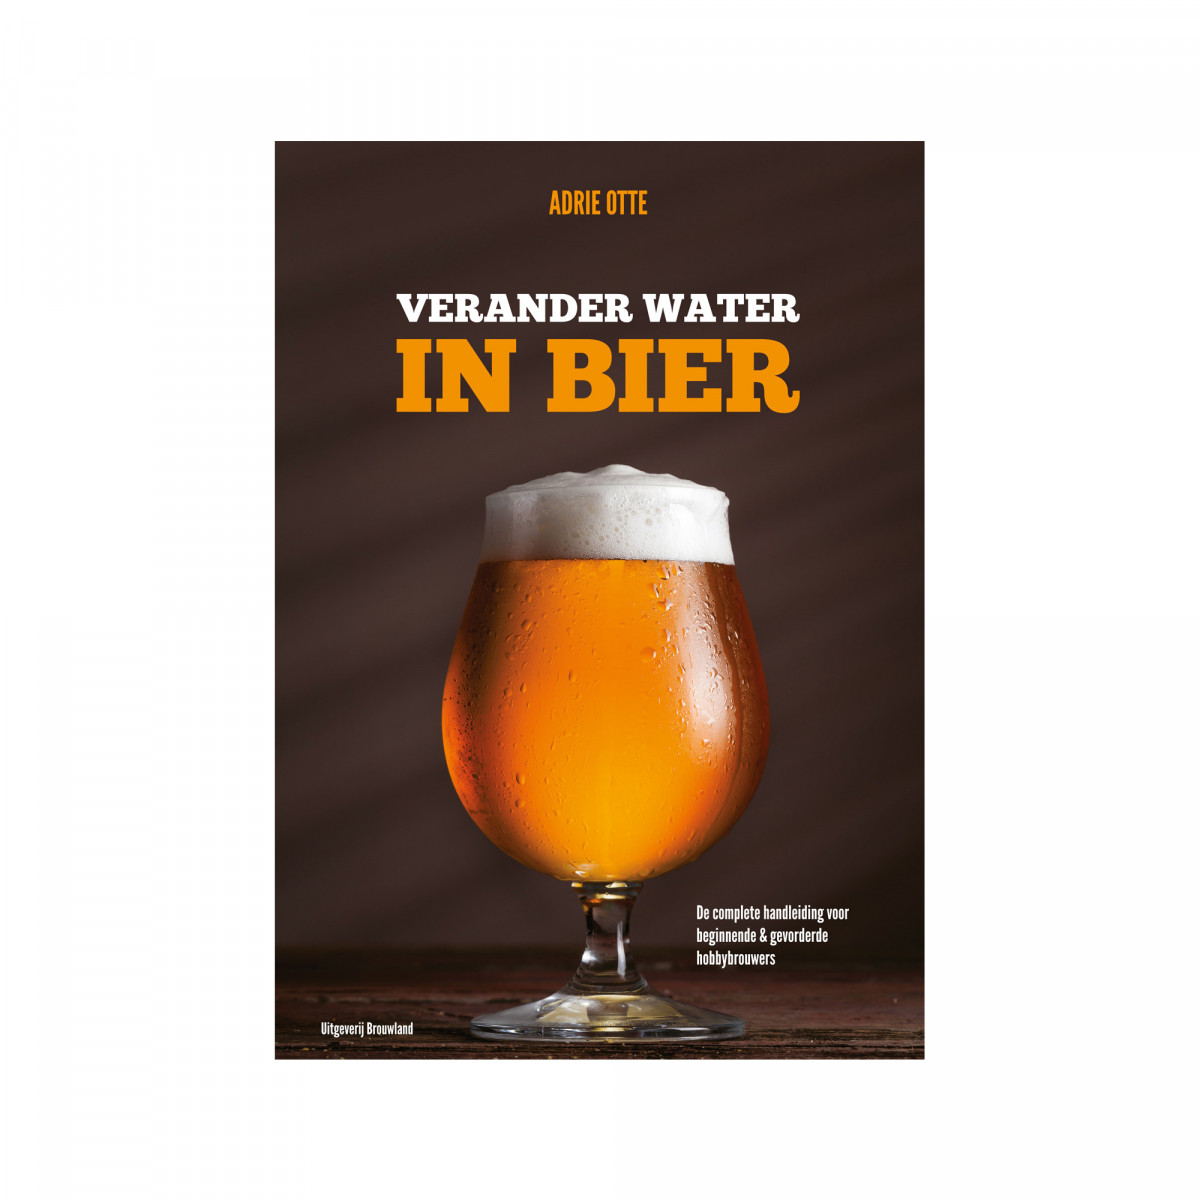 Verander water in bier - A. Otte - 2eme édition